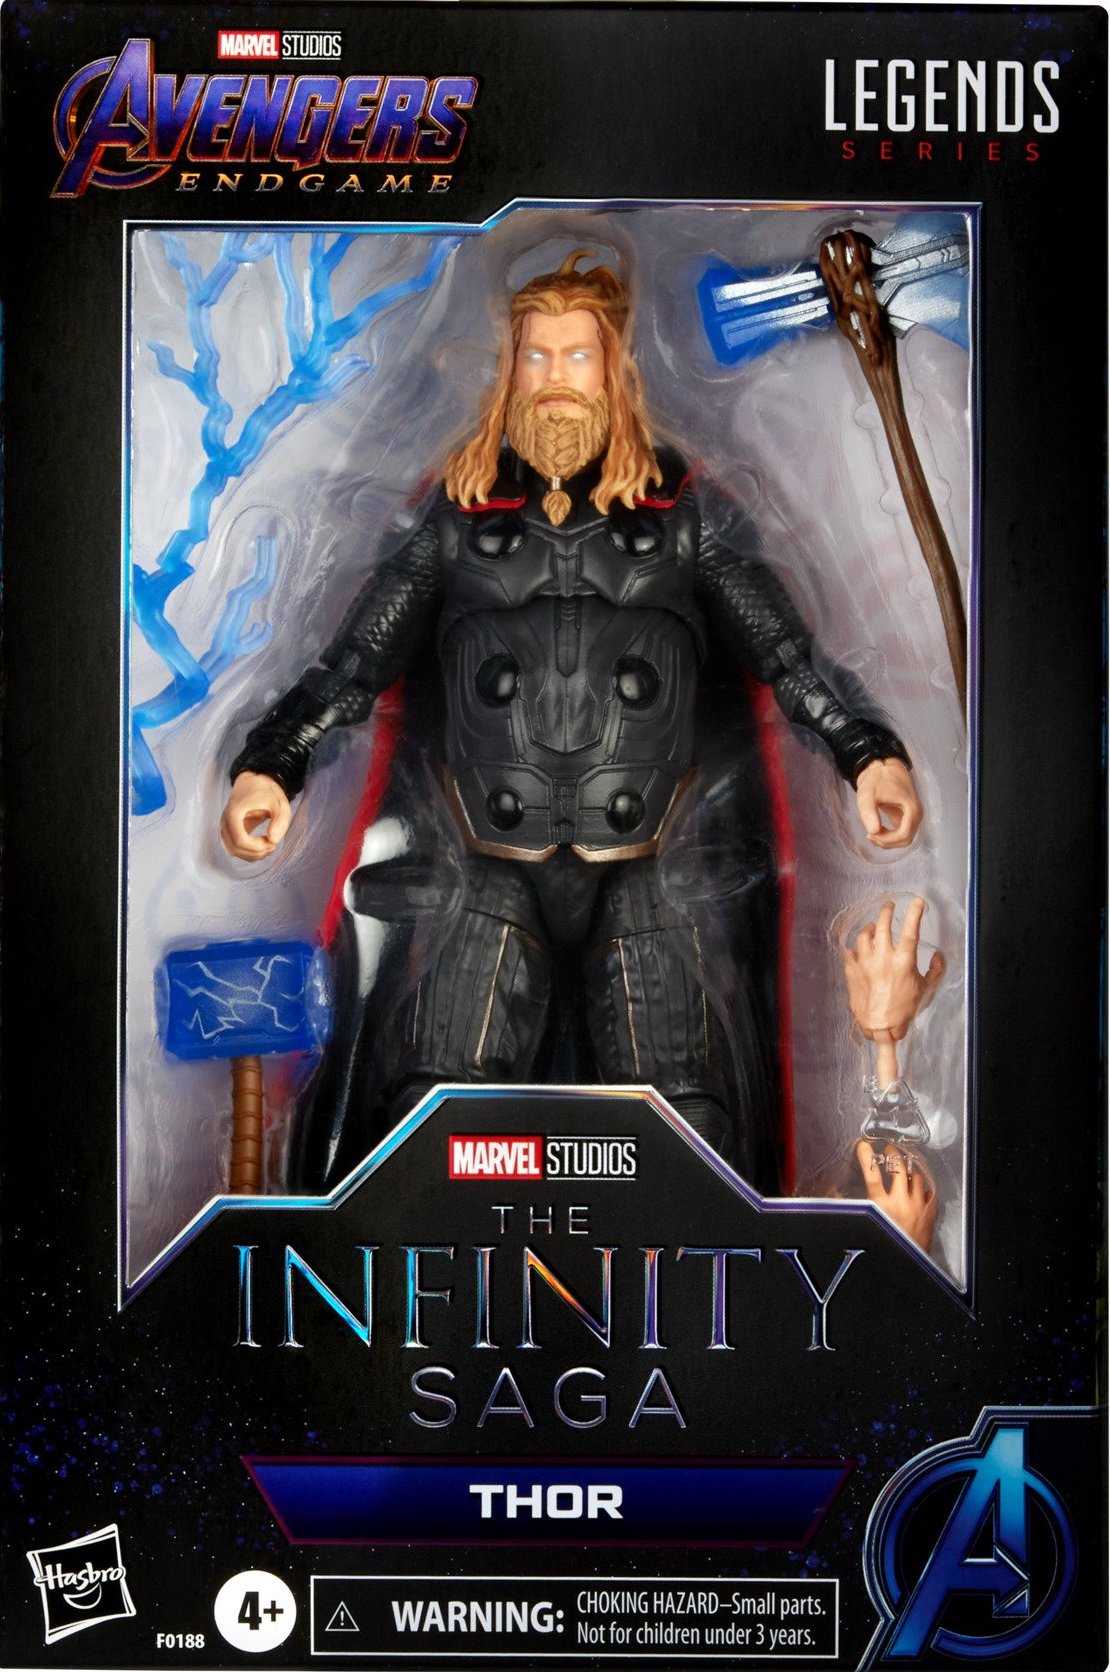 Continente sirena exilio Marvel Legends Infinity Saga Thor (Avengers Endgame)